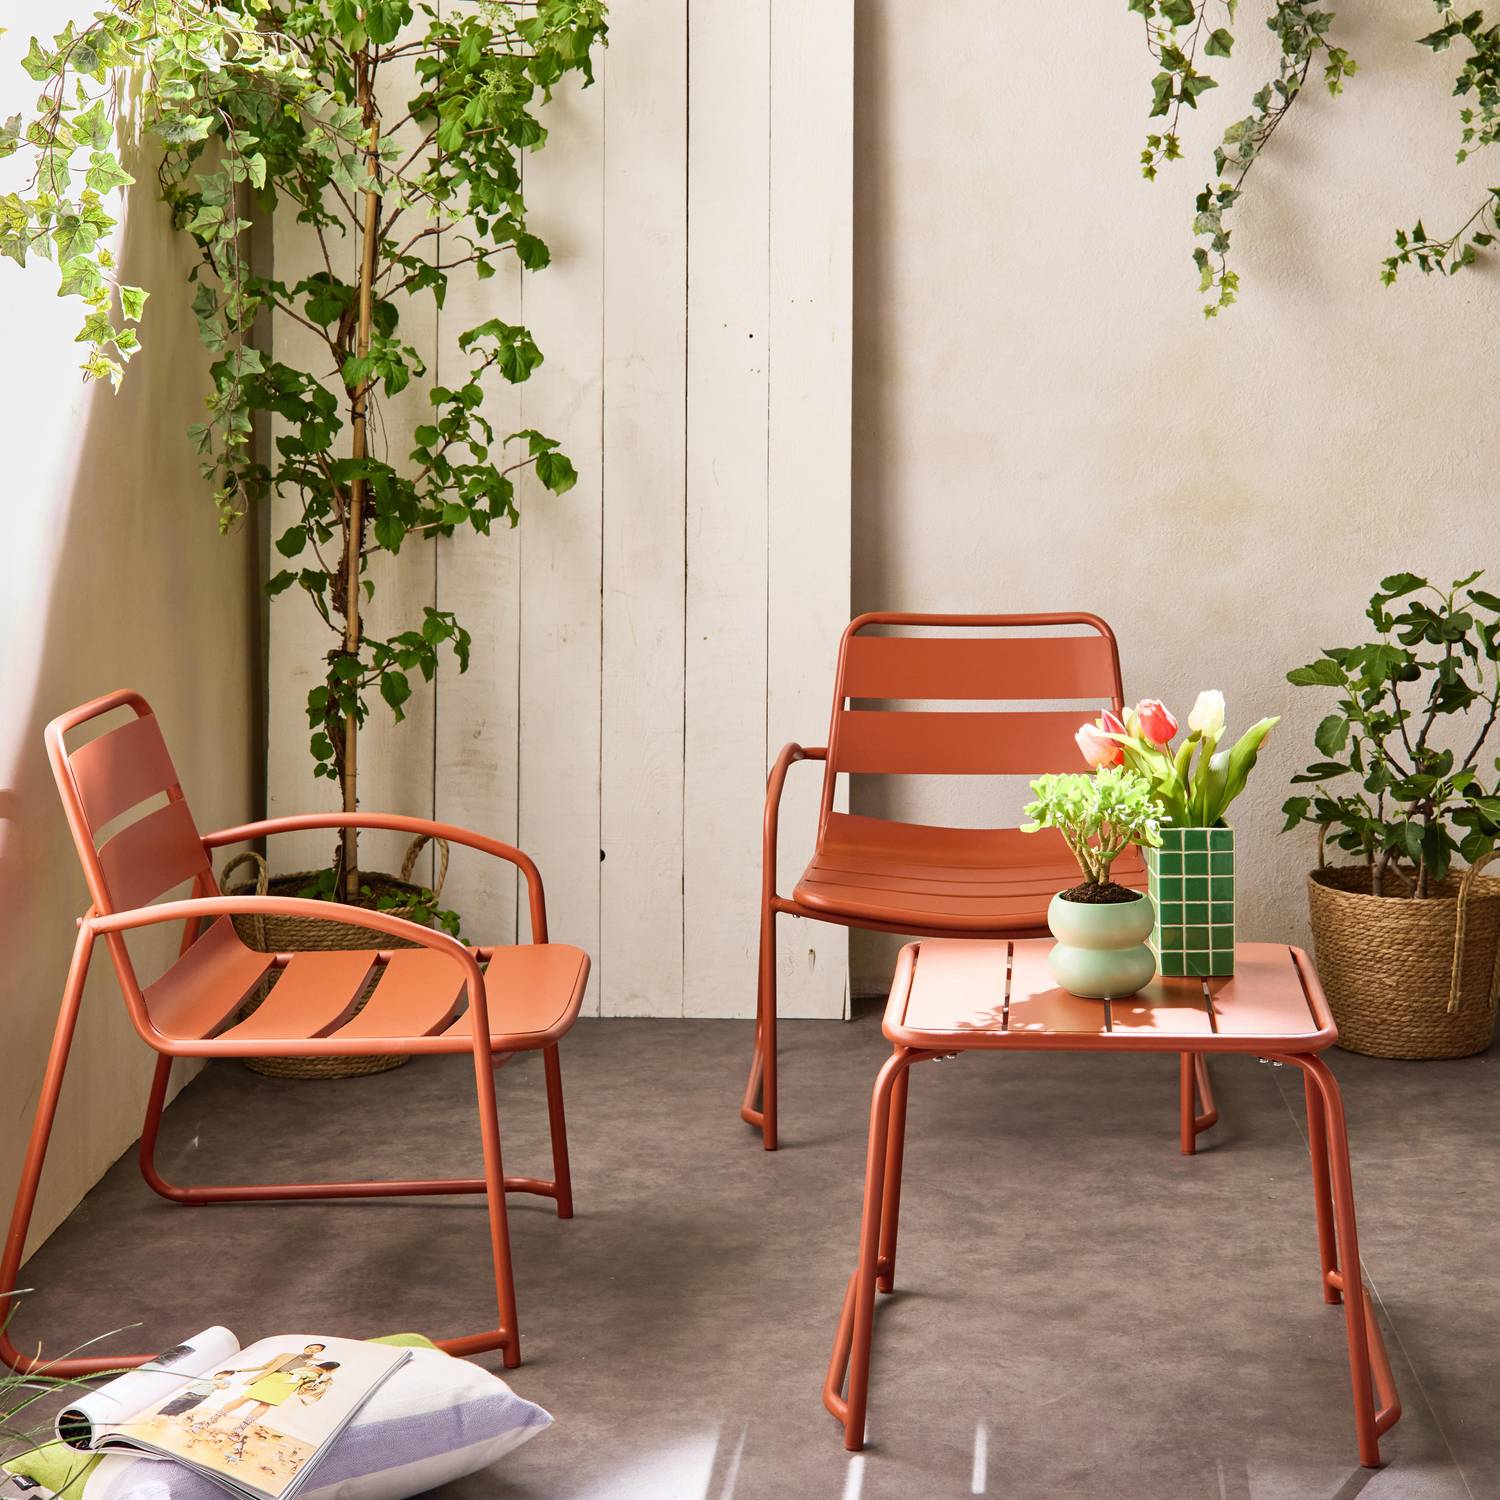 Suzana terracotta tuinset, 2 stoelen 1 stalen bijzettafel Photo2